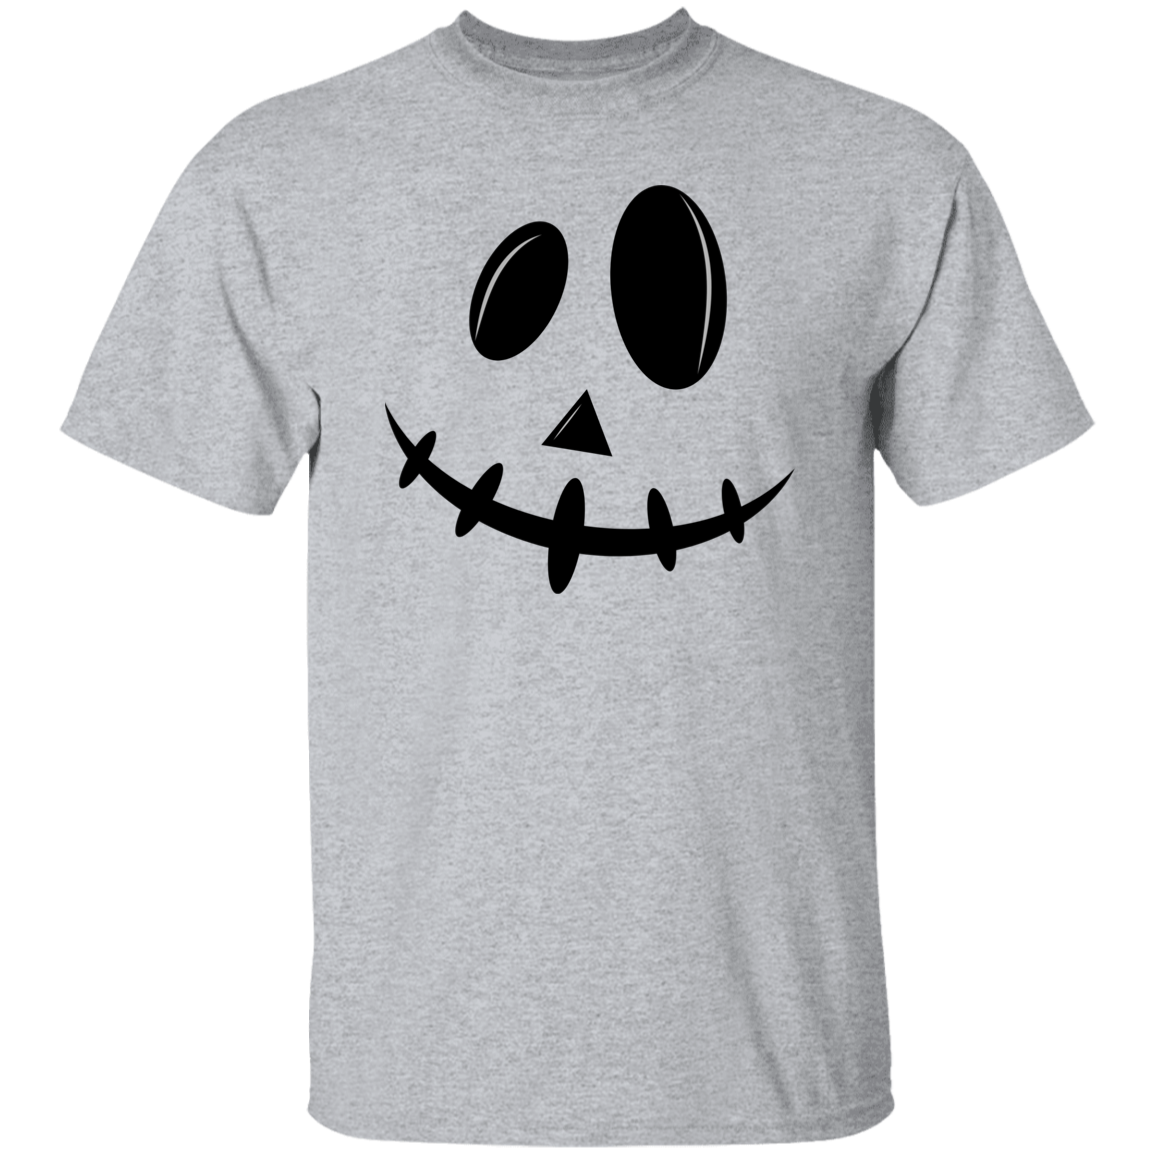 GHOST FACE 5.3 oz. T-Shirt